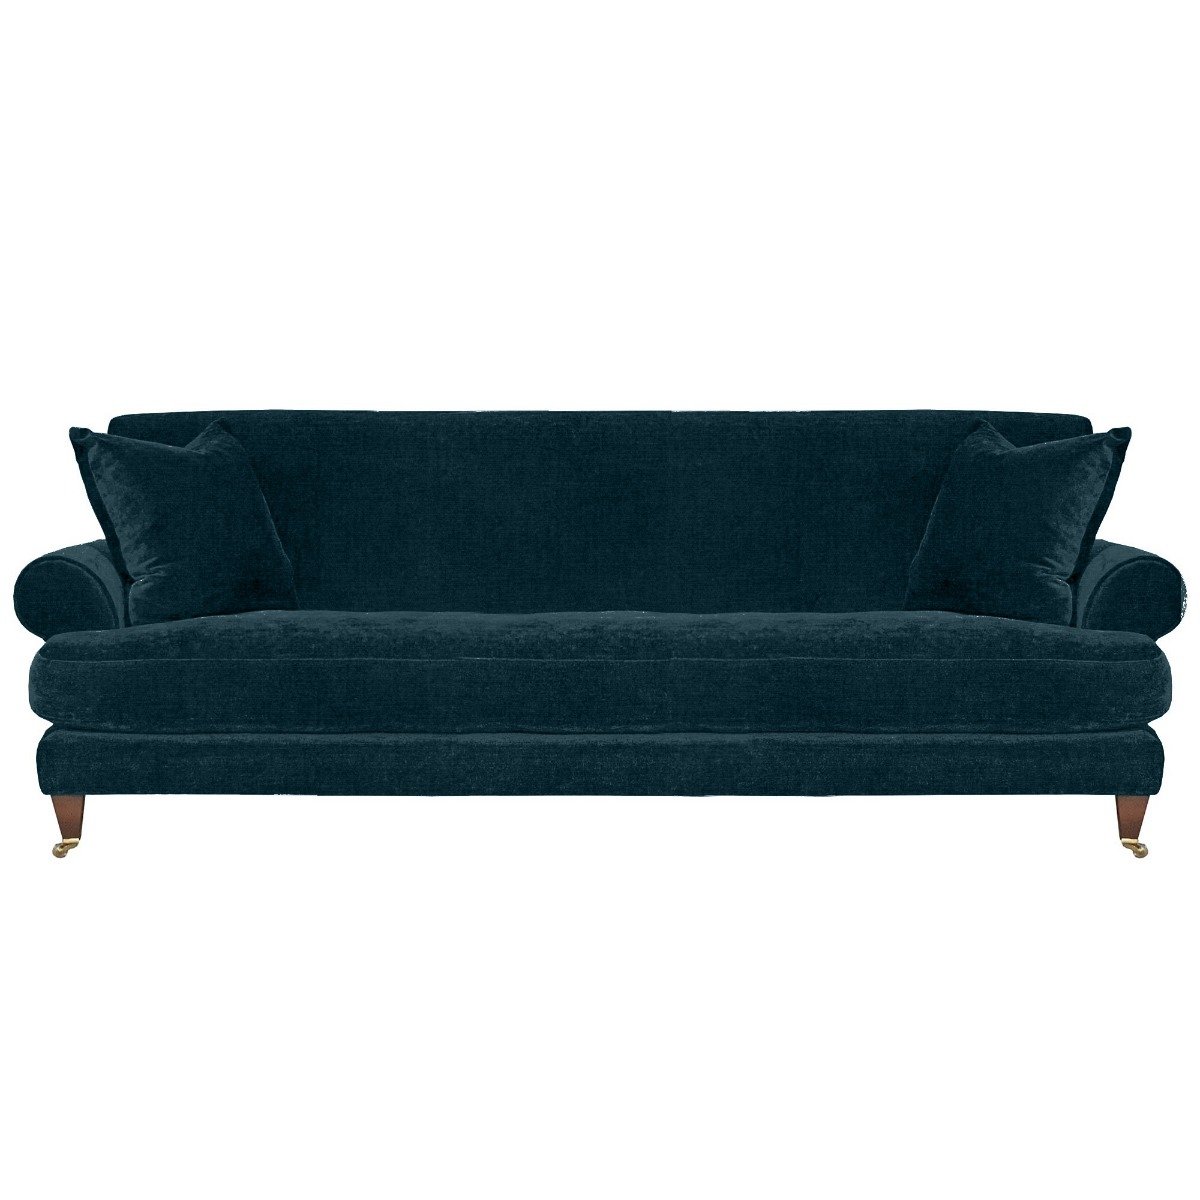 Fairlawn 4 Seater Sofa, Teal Fabric | Barker & Stonehouse